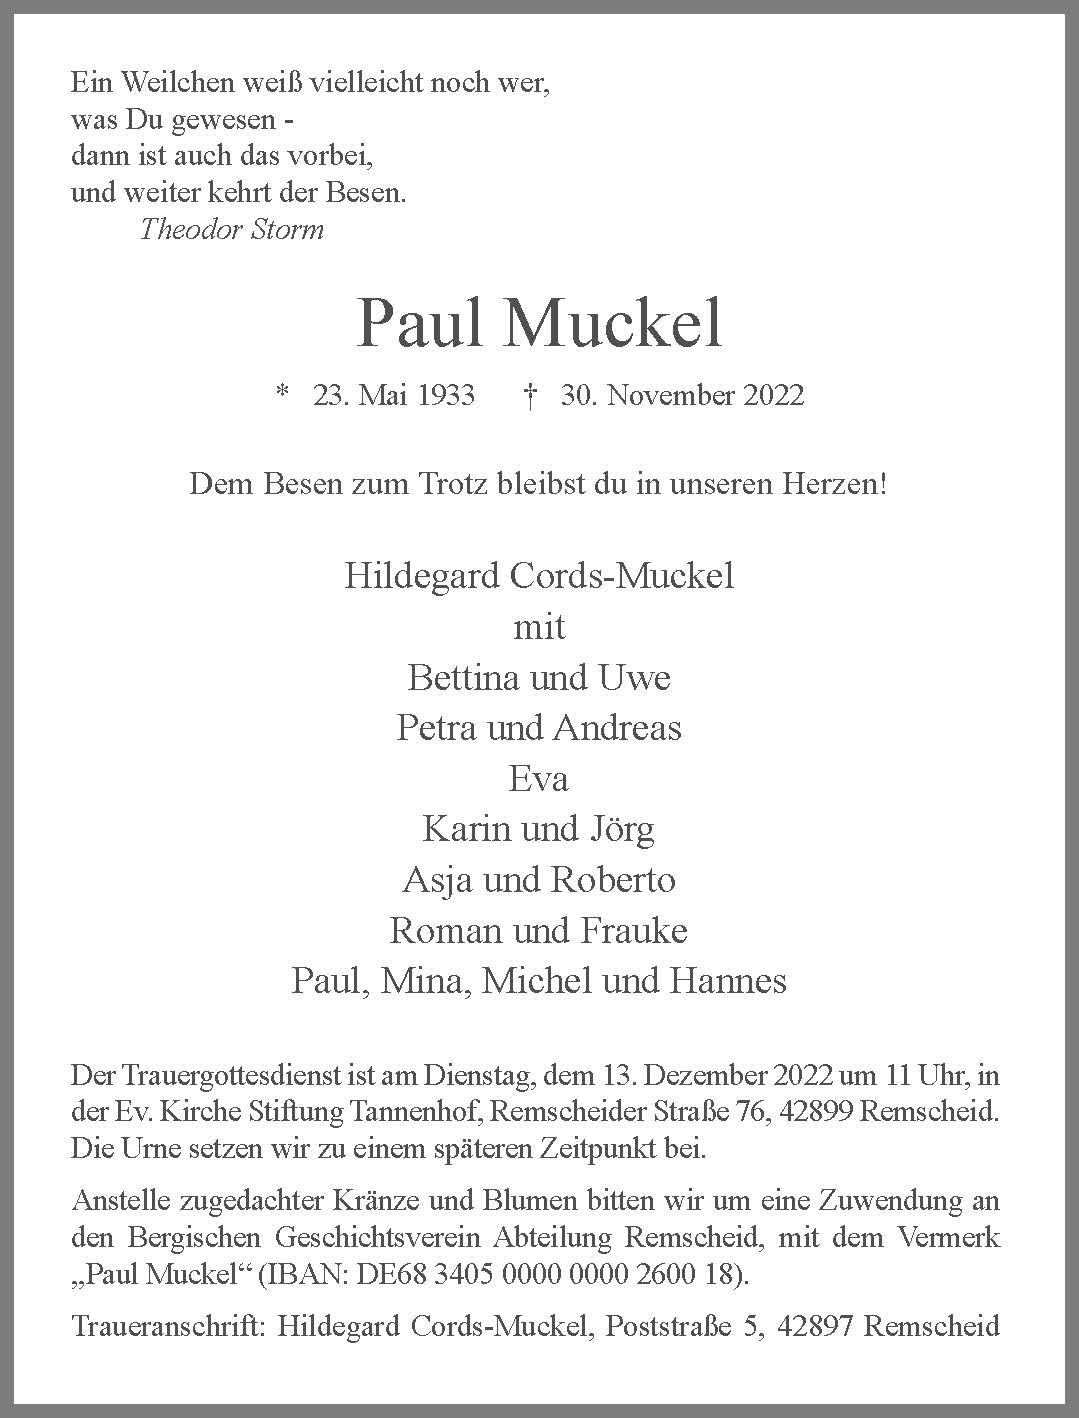 Paul Muckel